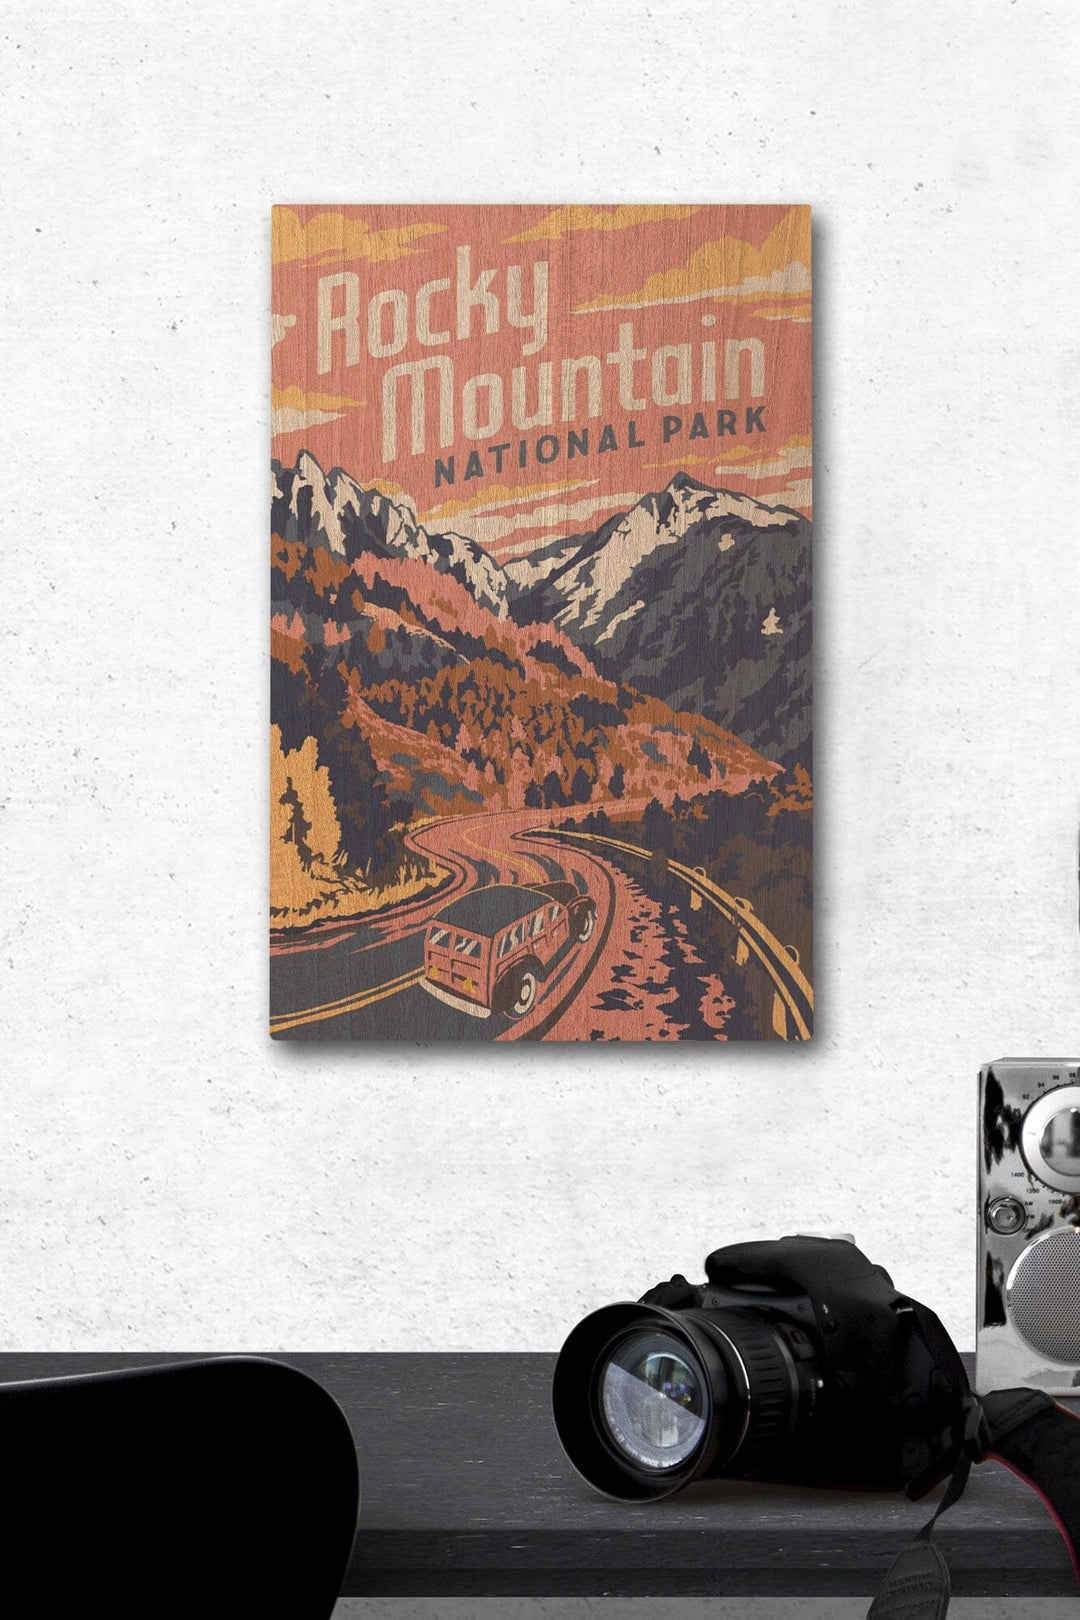 Rocky Mountain National Park, Colorado, Explorer Series, Lantern Press Artwork, Wood Signs and Postcards Wood Lantern Press 12 x 18 Wood Gallery Print 